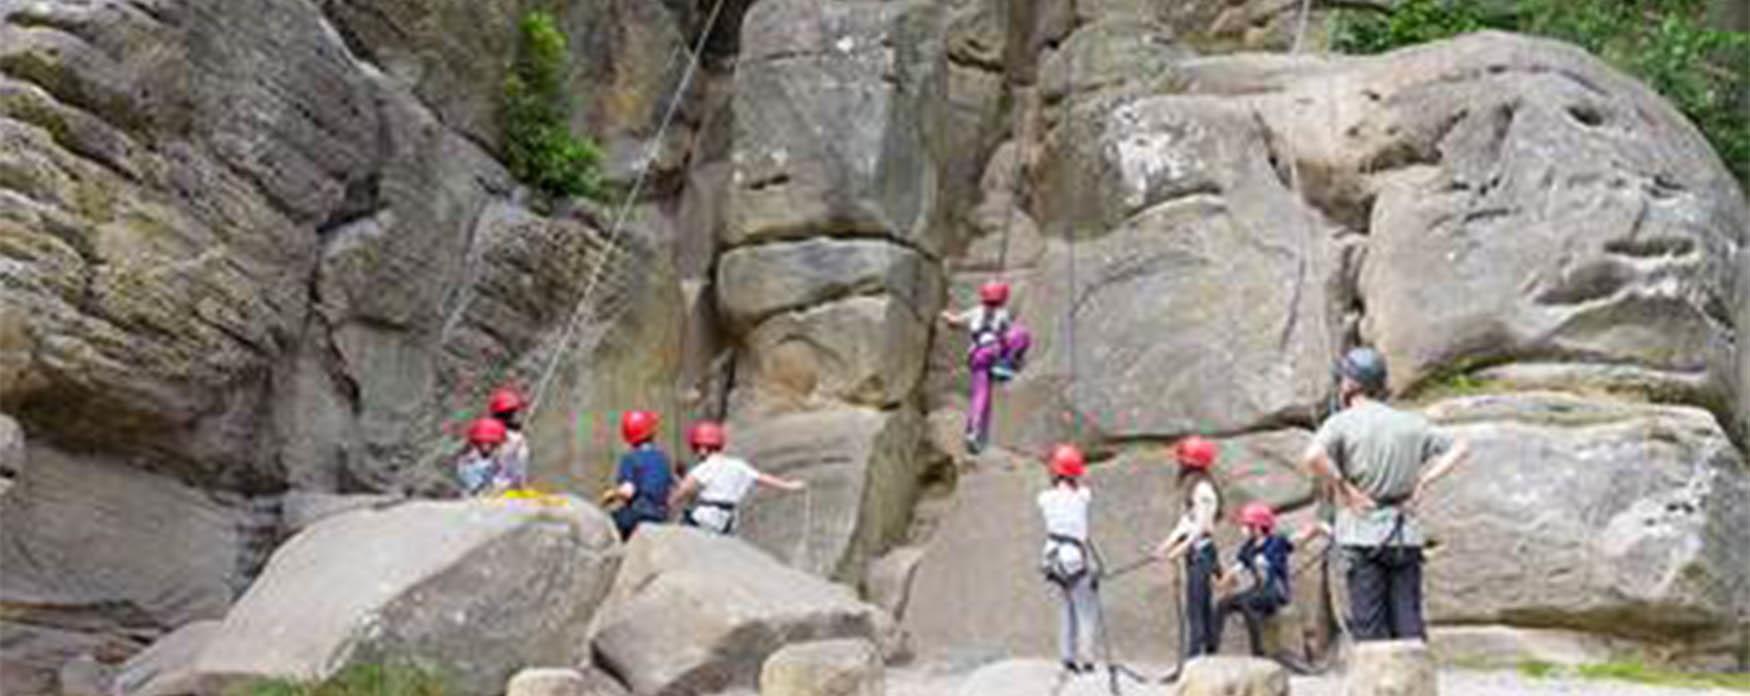 Children climbing Bowles Rock